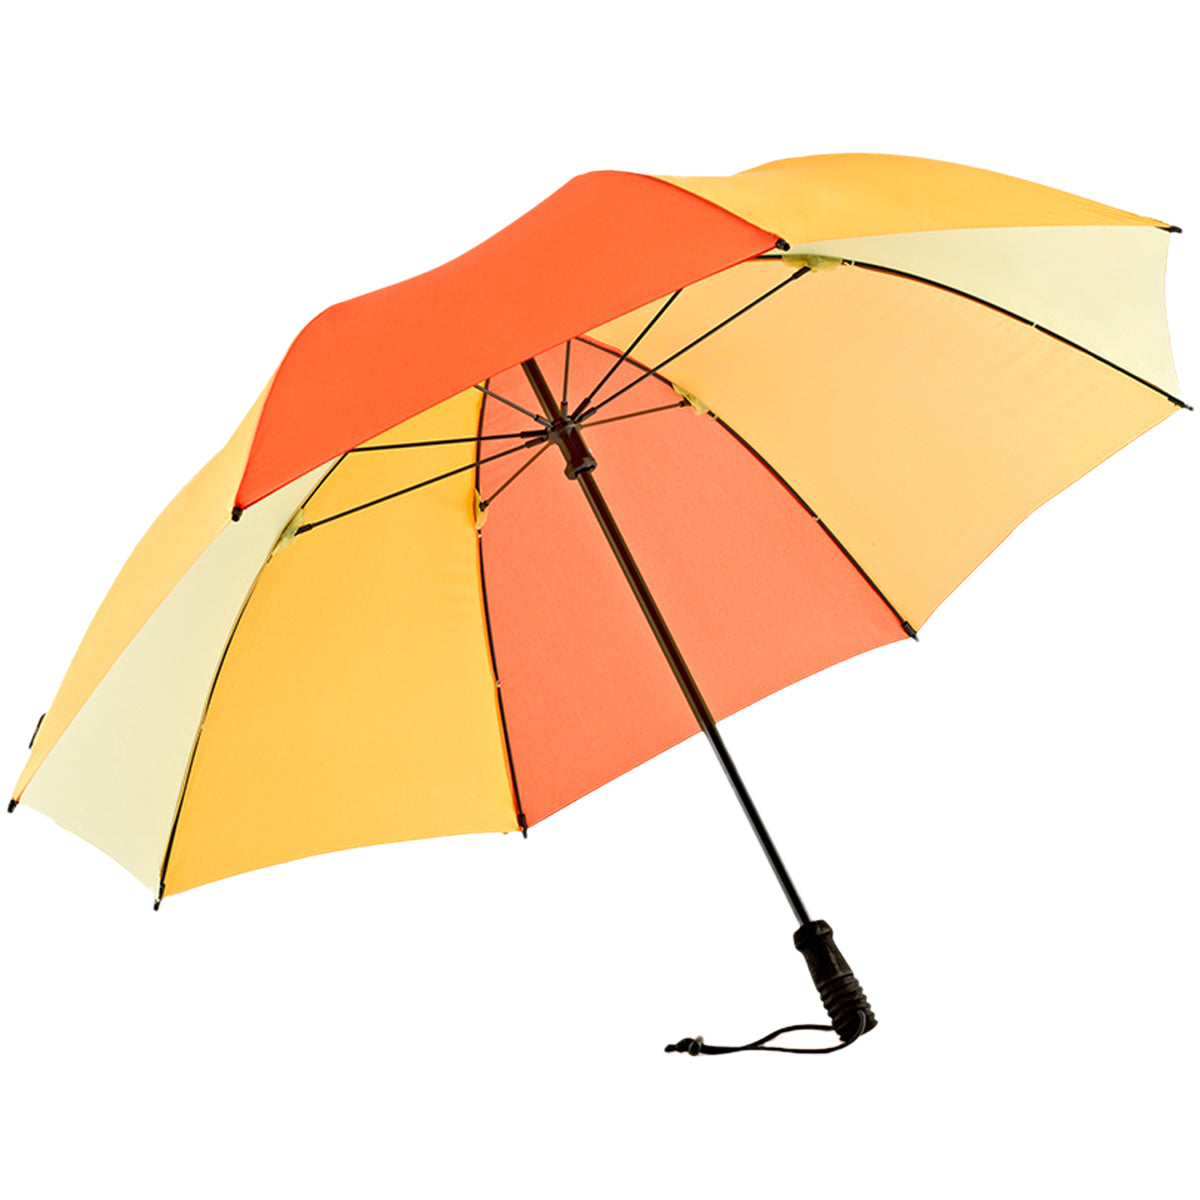 EuroSchirm Telescope Handsfree Umbrella Hiking Umbrella Orange